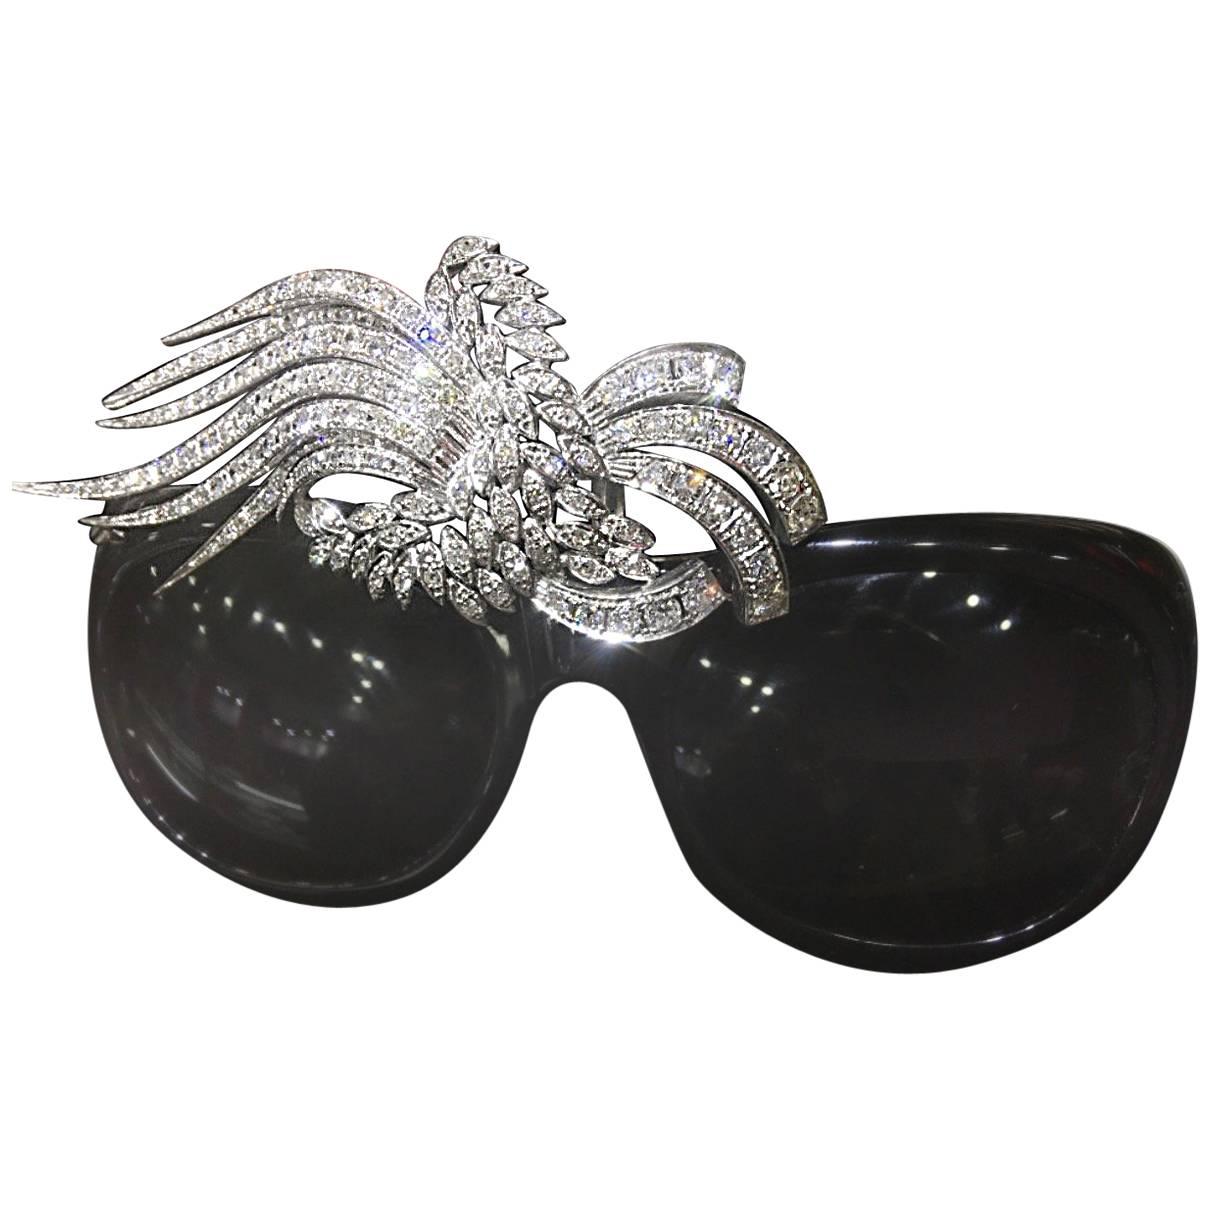 STACY ENGMAN ART ROYALTY - 20ct Diamond Sunglasses-Tiara For Sale